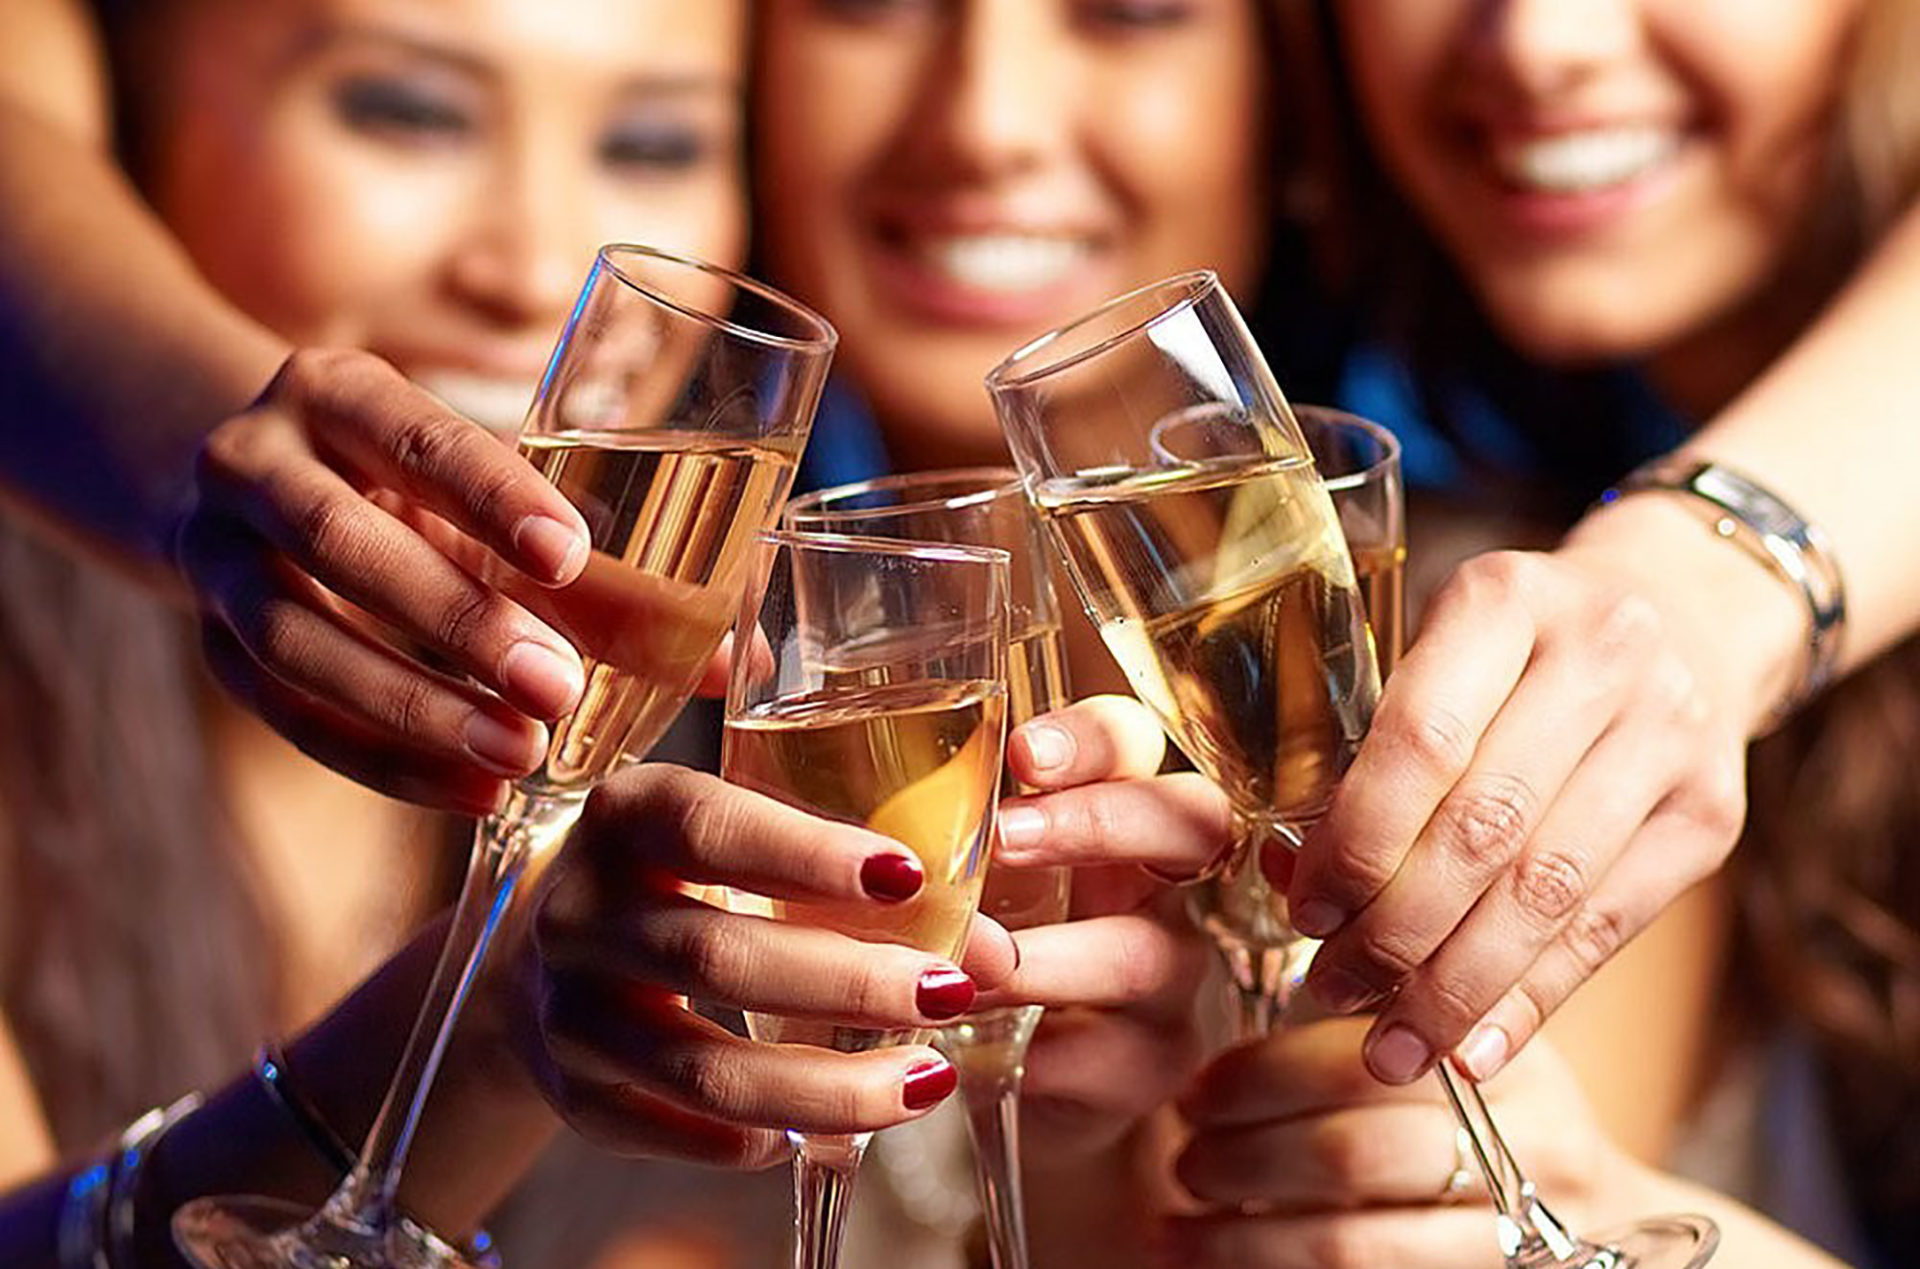 group-women-cheersing-champagne